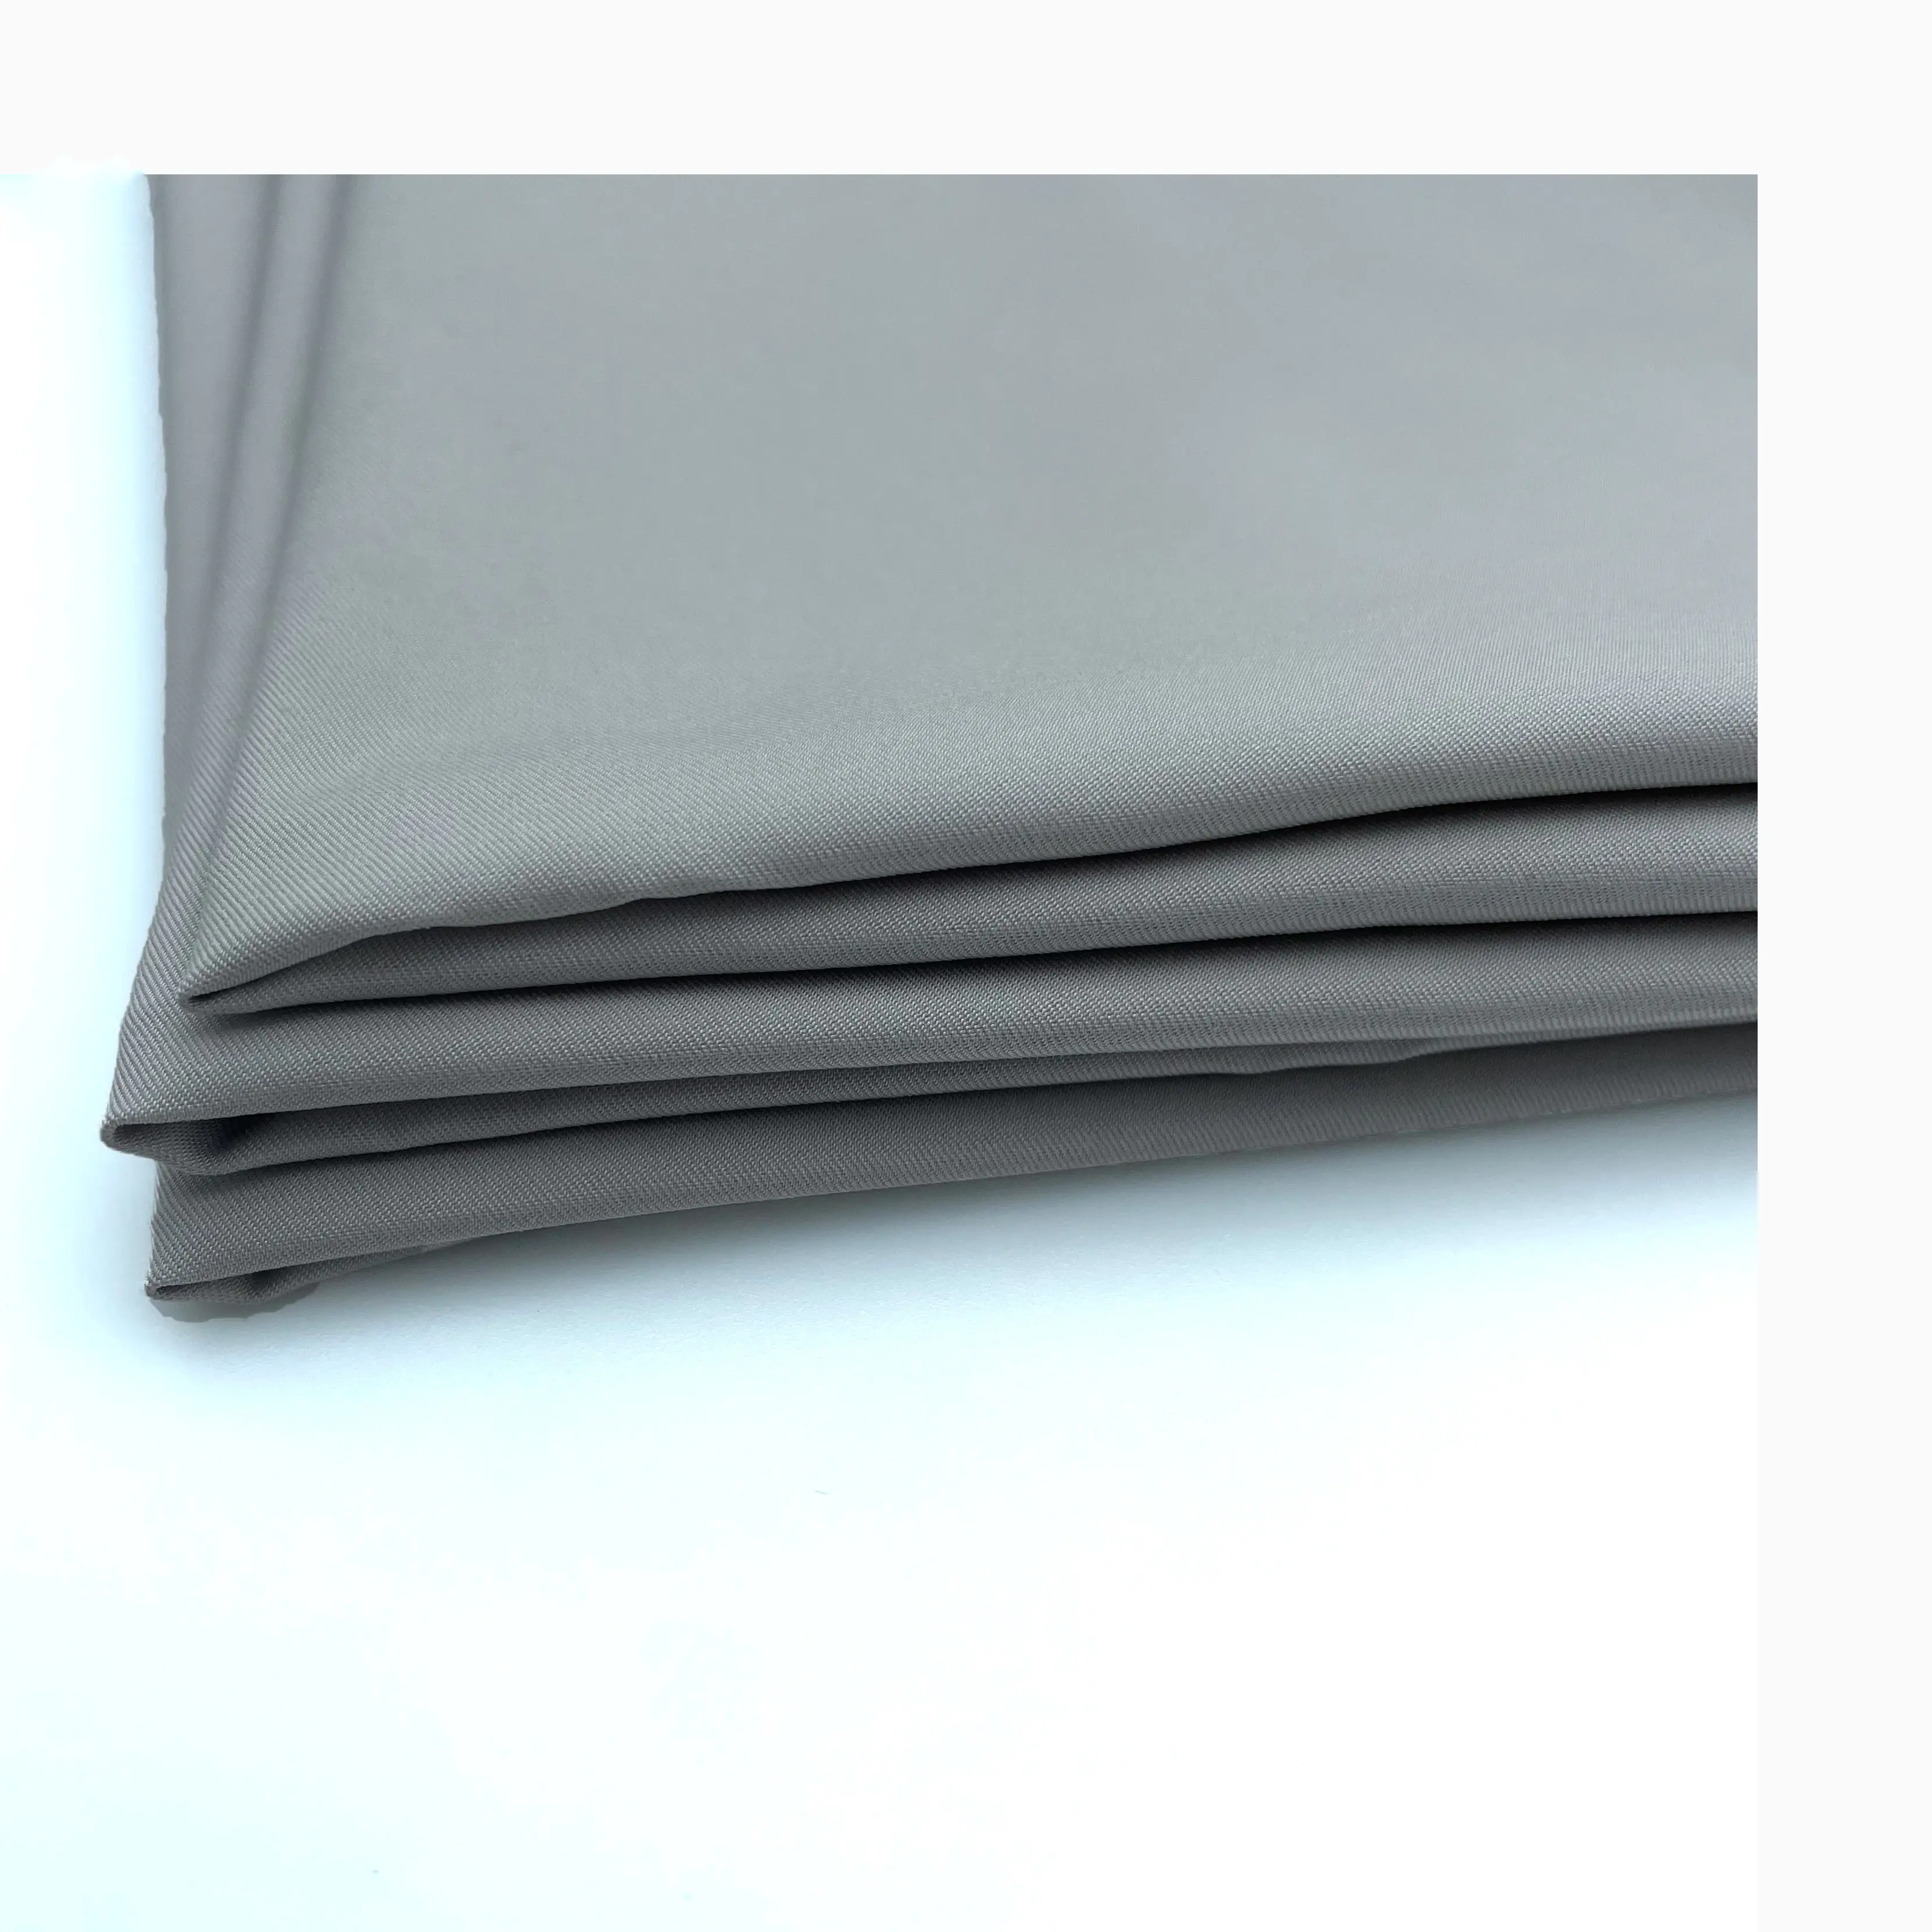 Acetate Fabric Cellulose Acetate Filaments Acid Fiber Silk Like Fabric Acetic Soft And Comfortable Fabric For Clothes